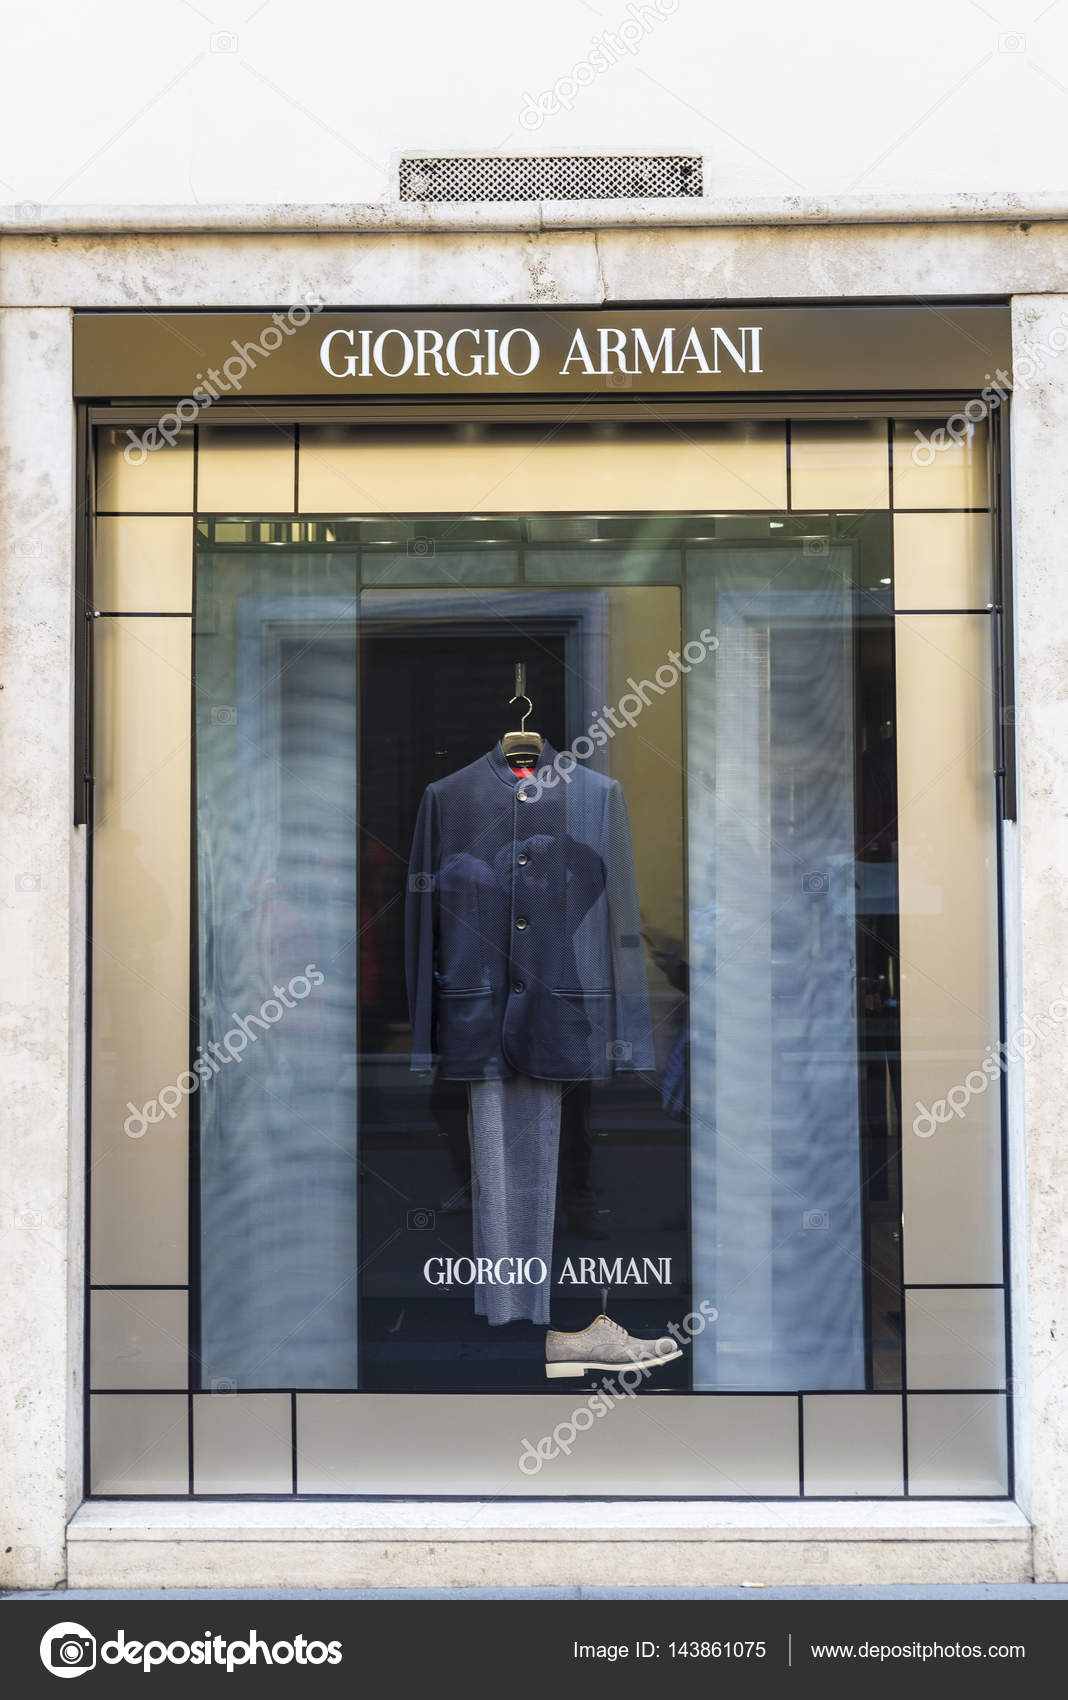 giorgio armani shop